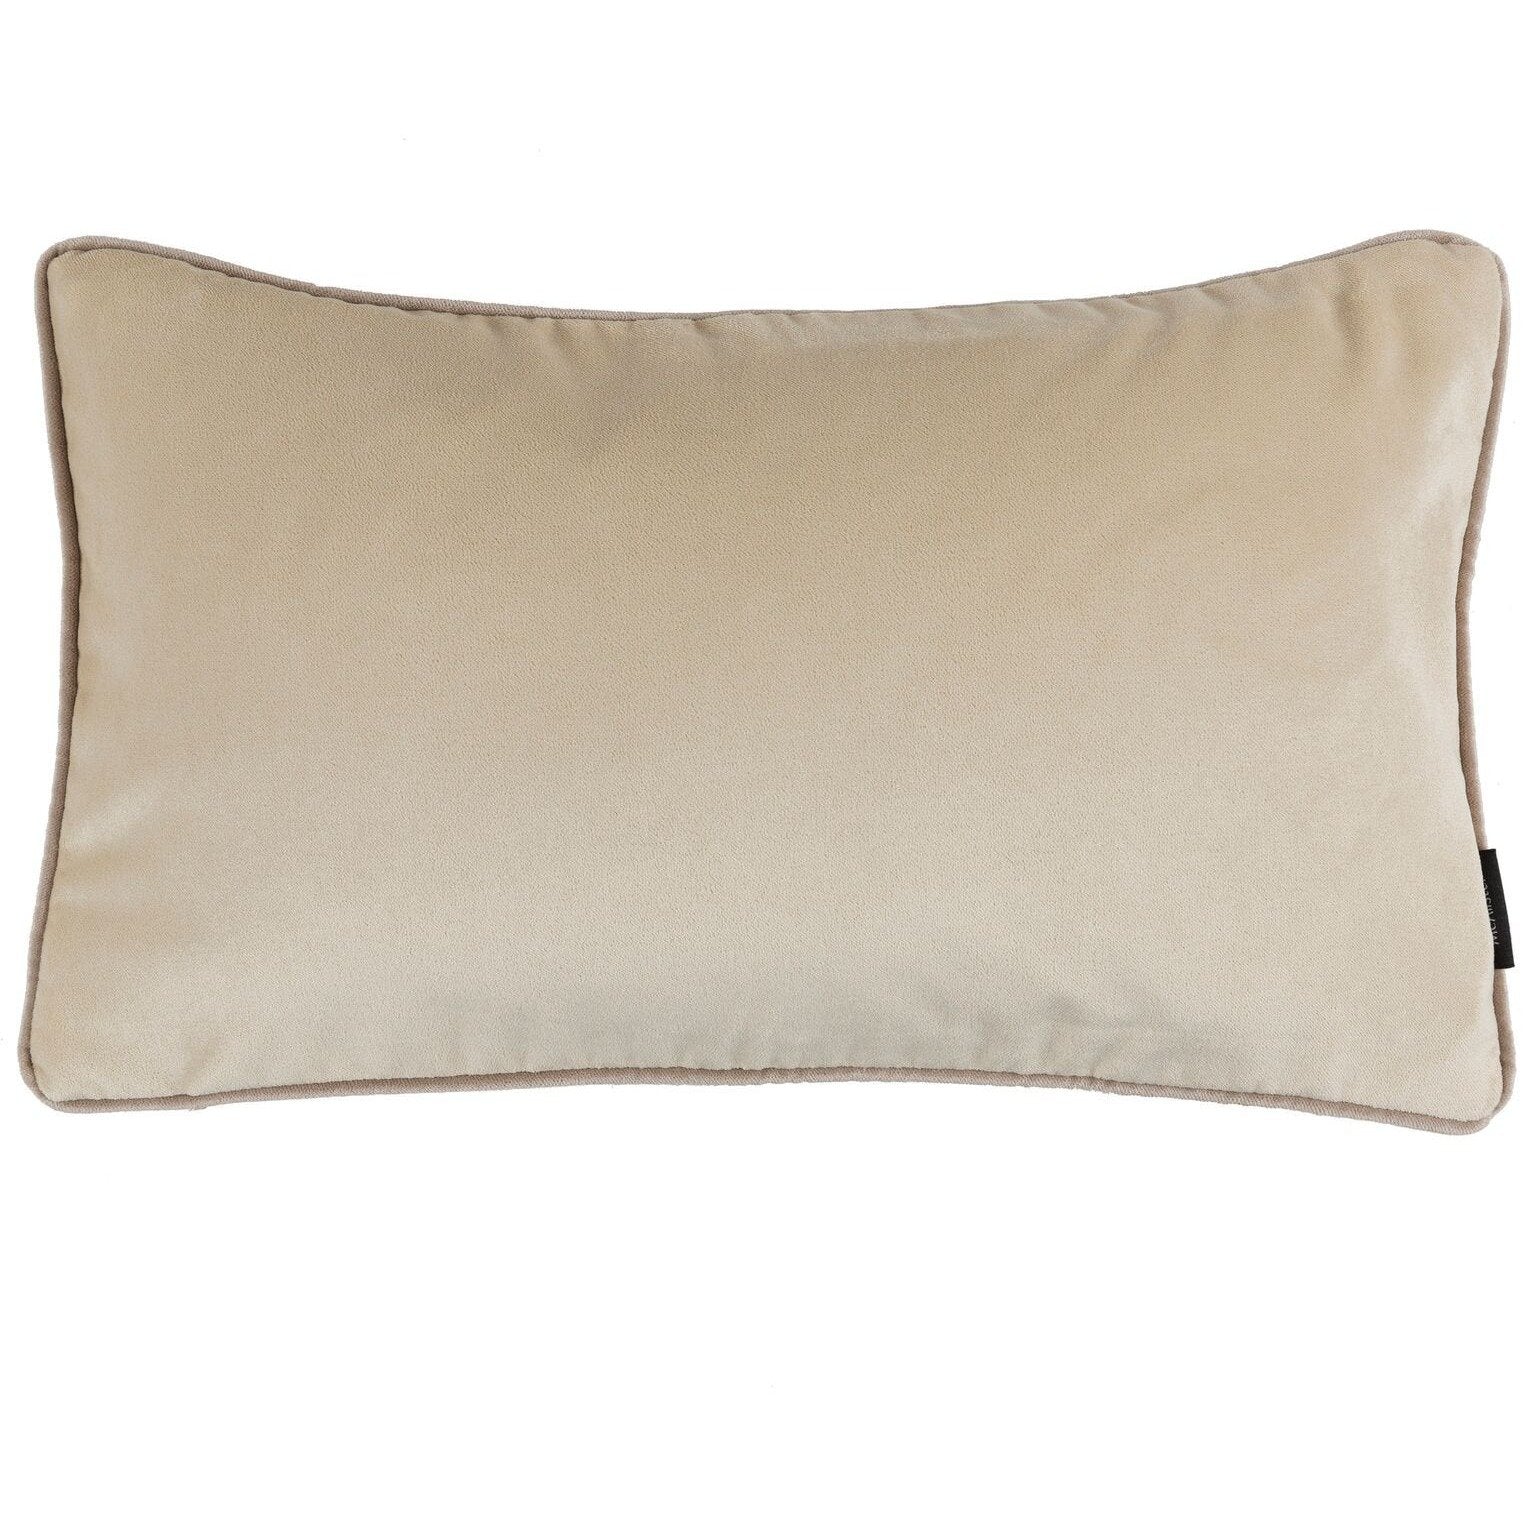 McAlister Textiles Matt Champagne Gold Velvet Pillow Pillow Cover Only 50cm x 30cm 